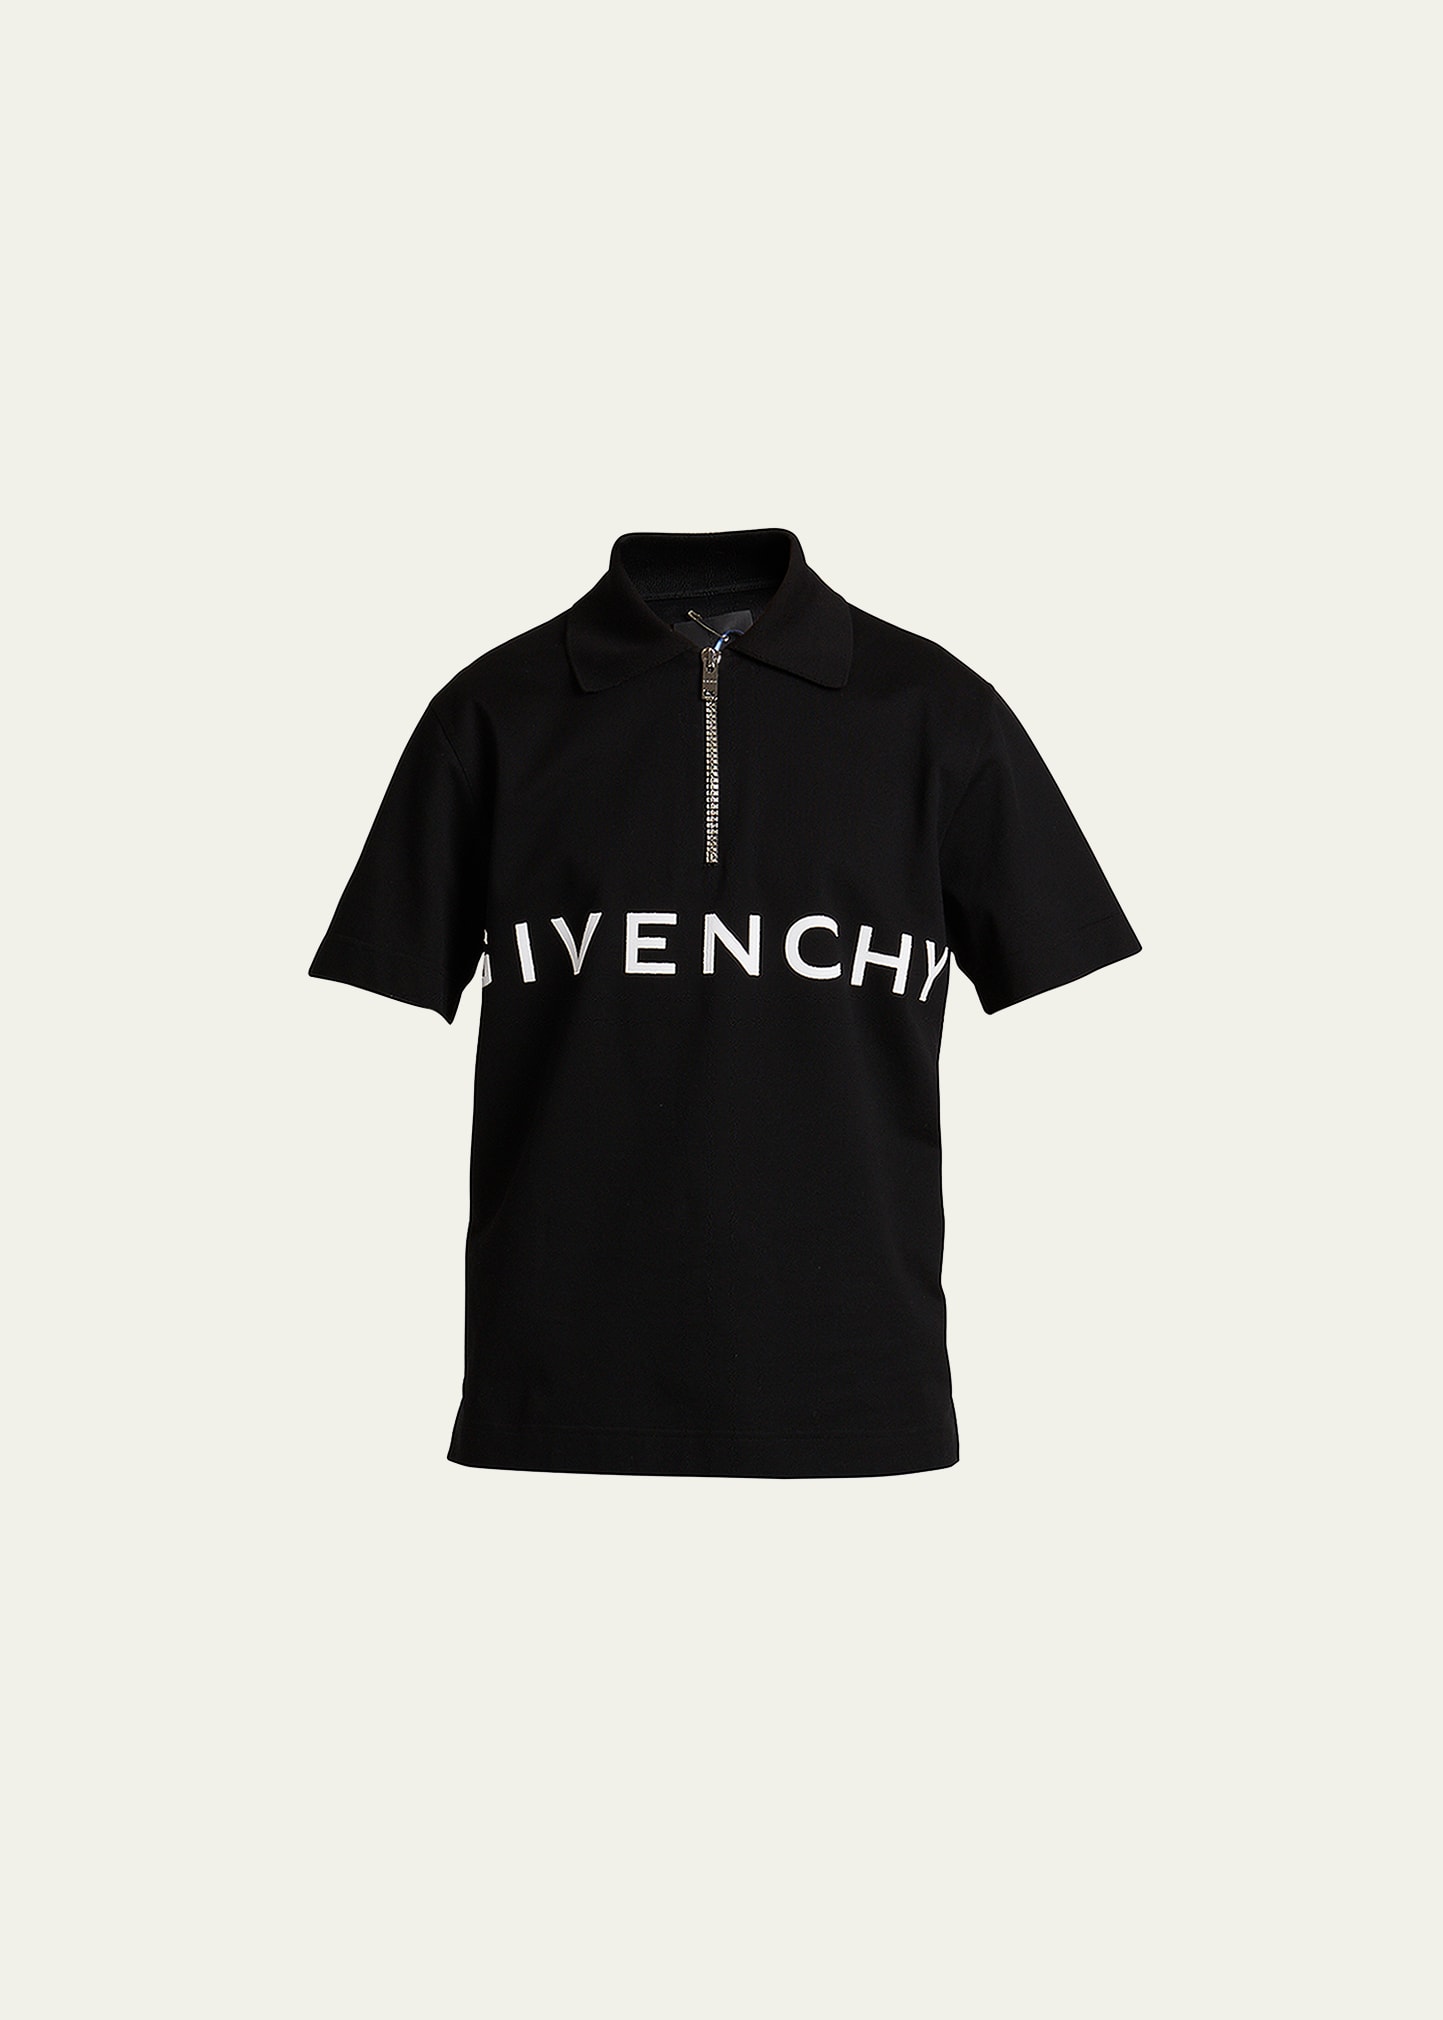 Givenchy Men's Classic-Fit Logo Zip Polo Shirt